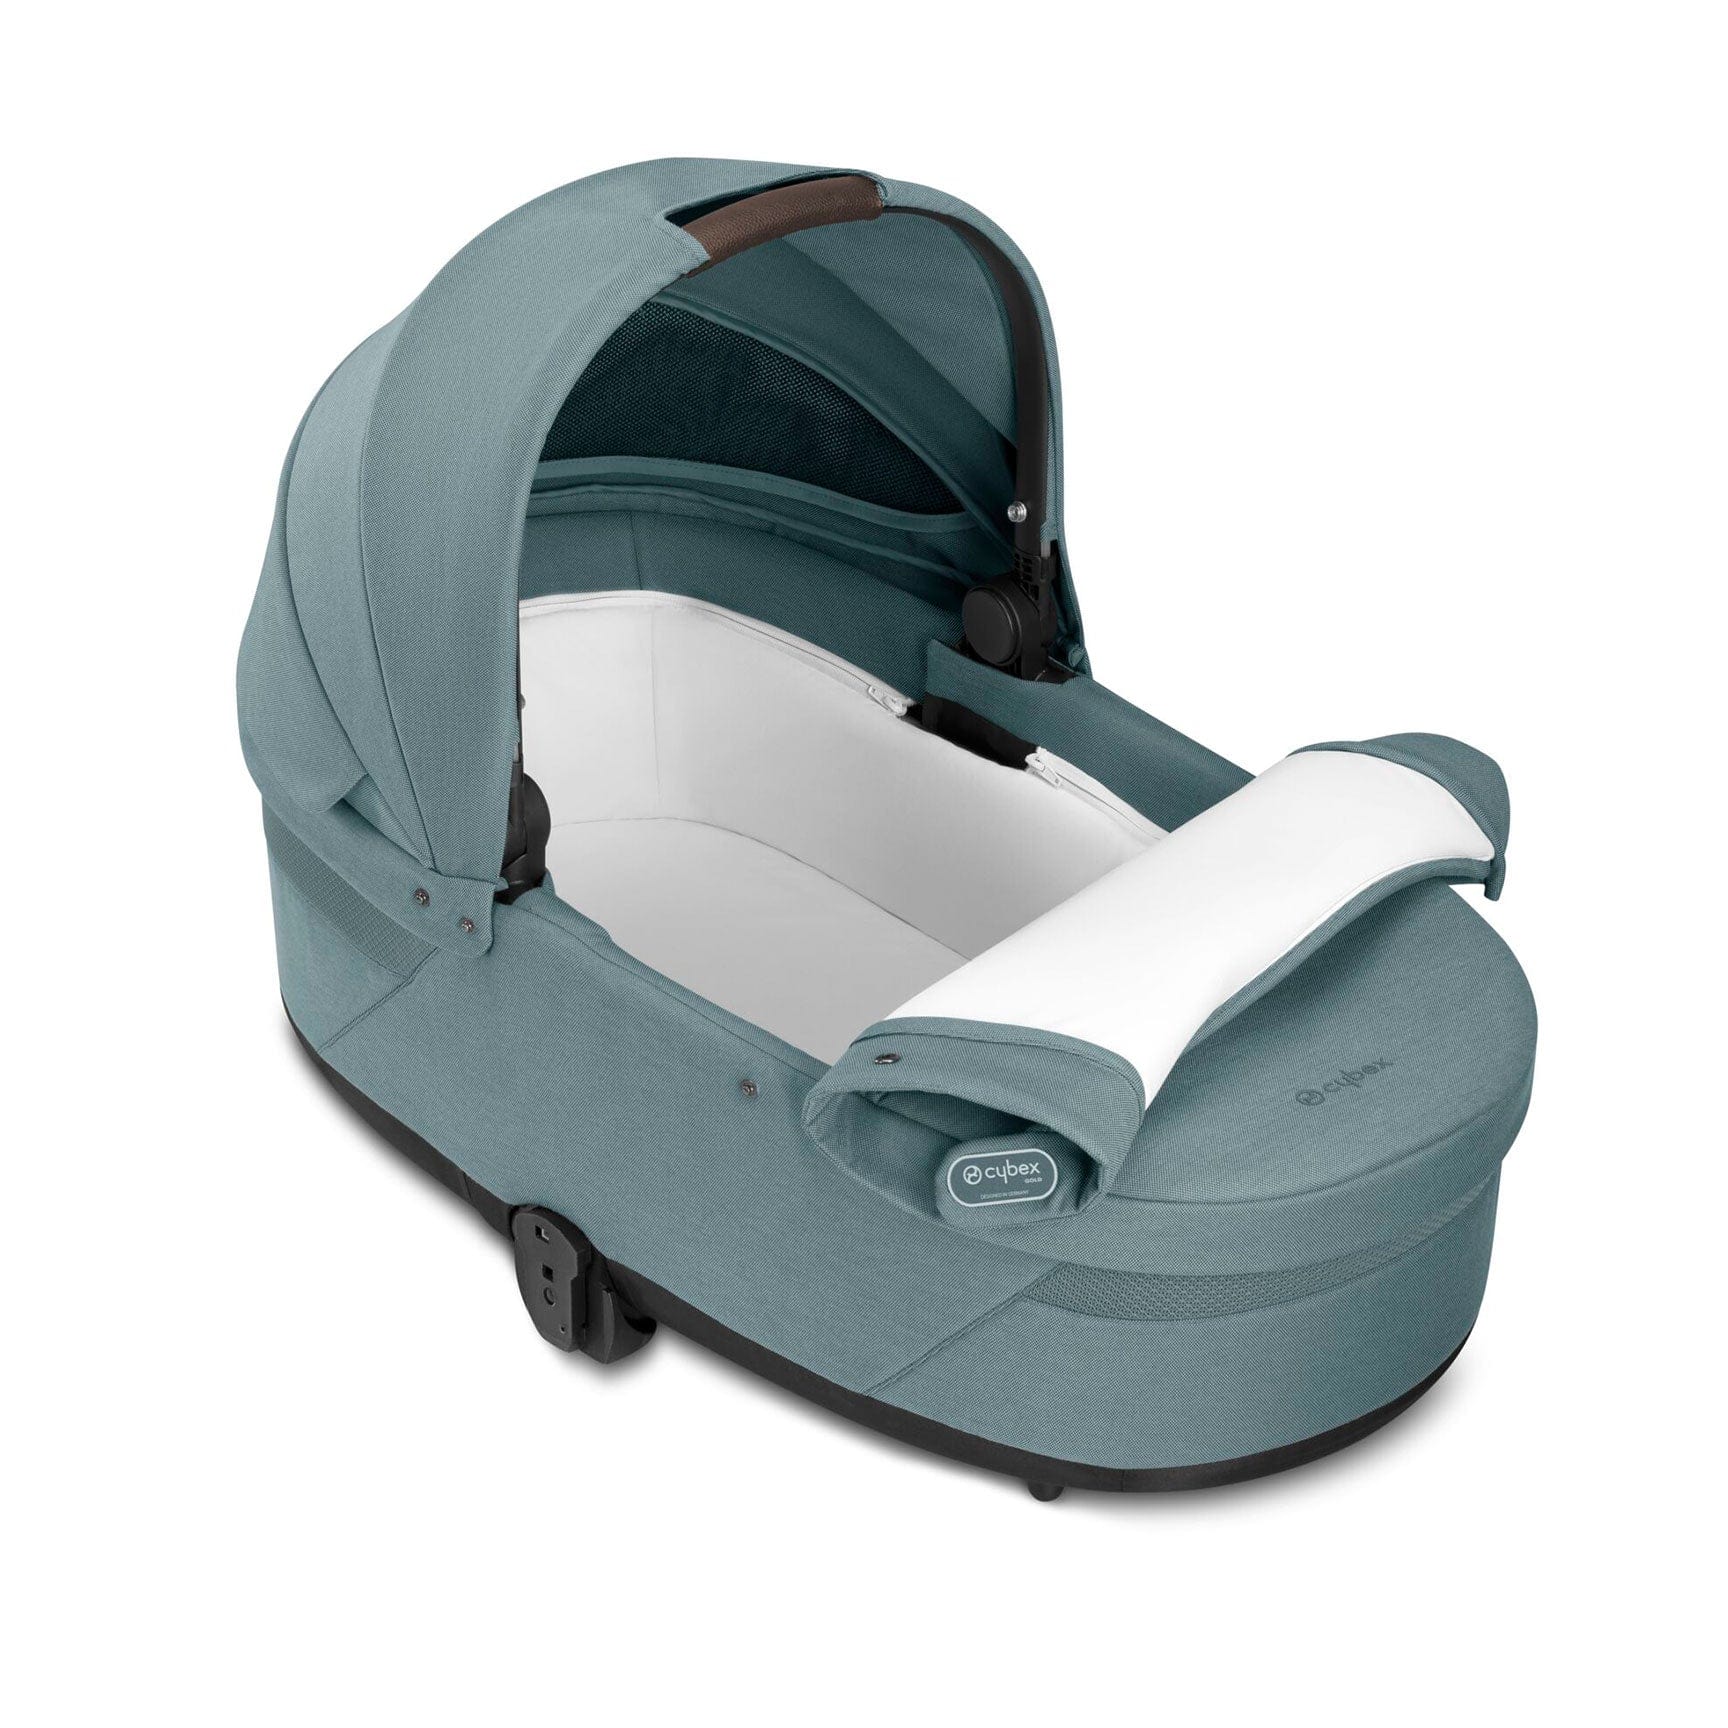 Cybex Baby Strollers Cybex Balios S Lux Essential Bundle - Taupe/Sky Blue 12753-TPE-SKY-BLU